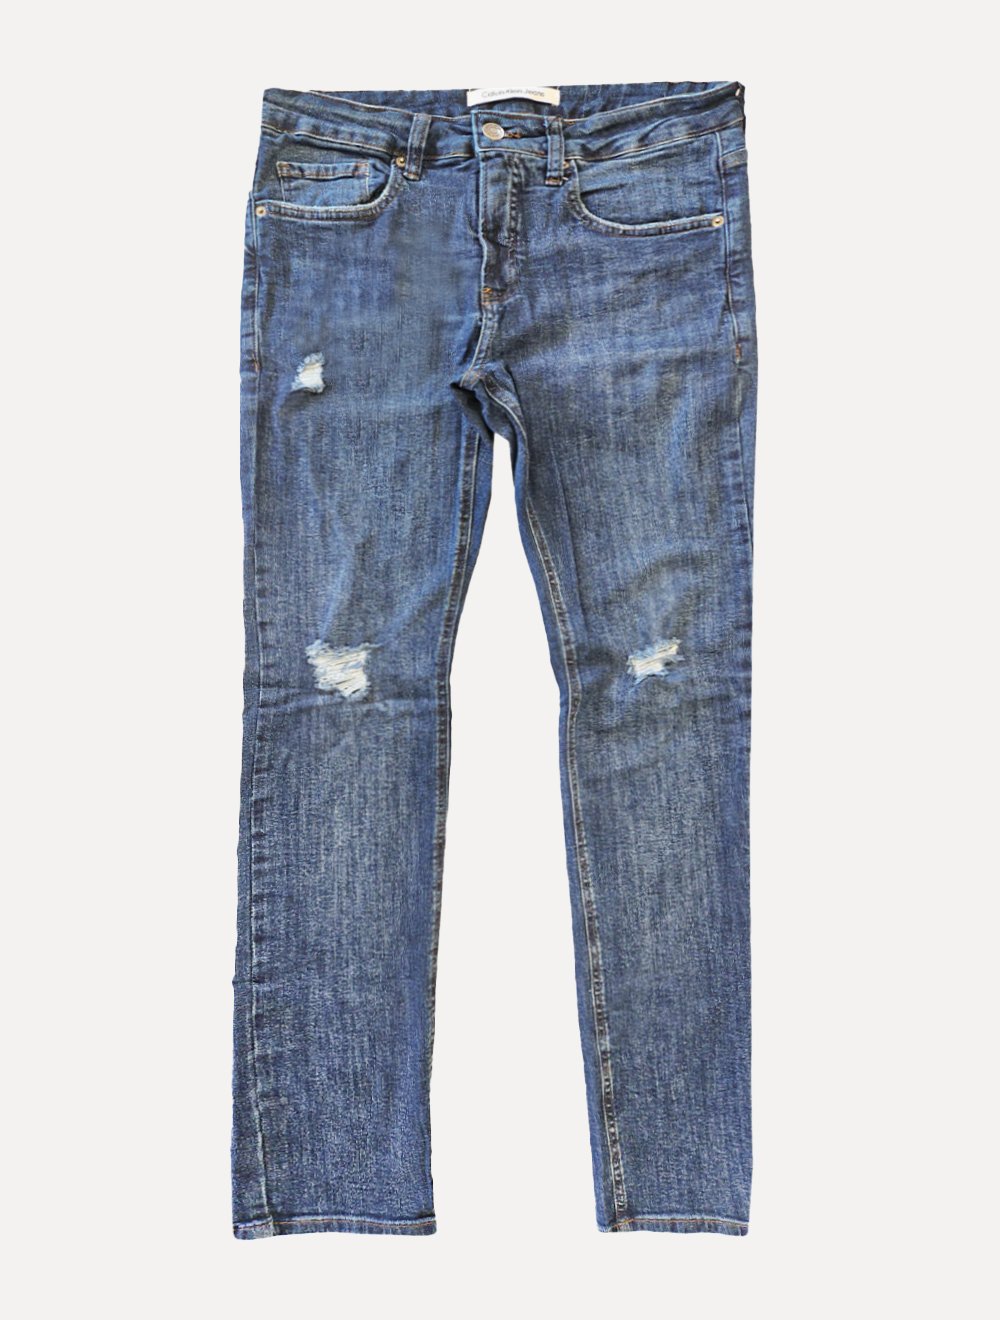 Calça Calvin Klein Jeans Masculina Stretch Destroyed Light Brown Tag Azul Marinho